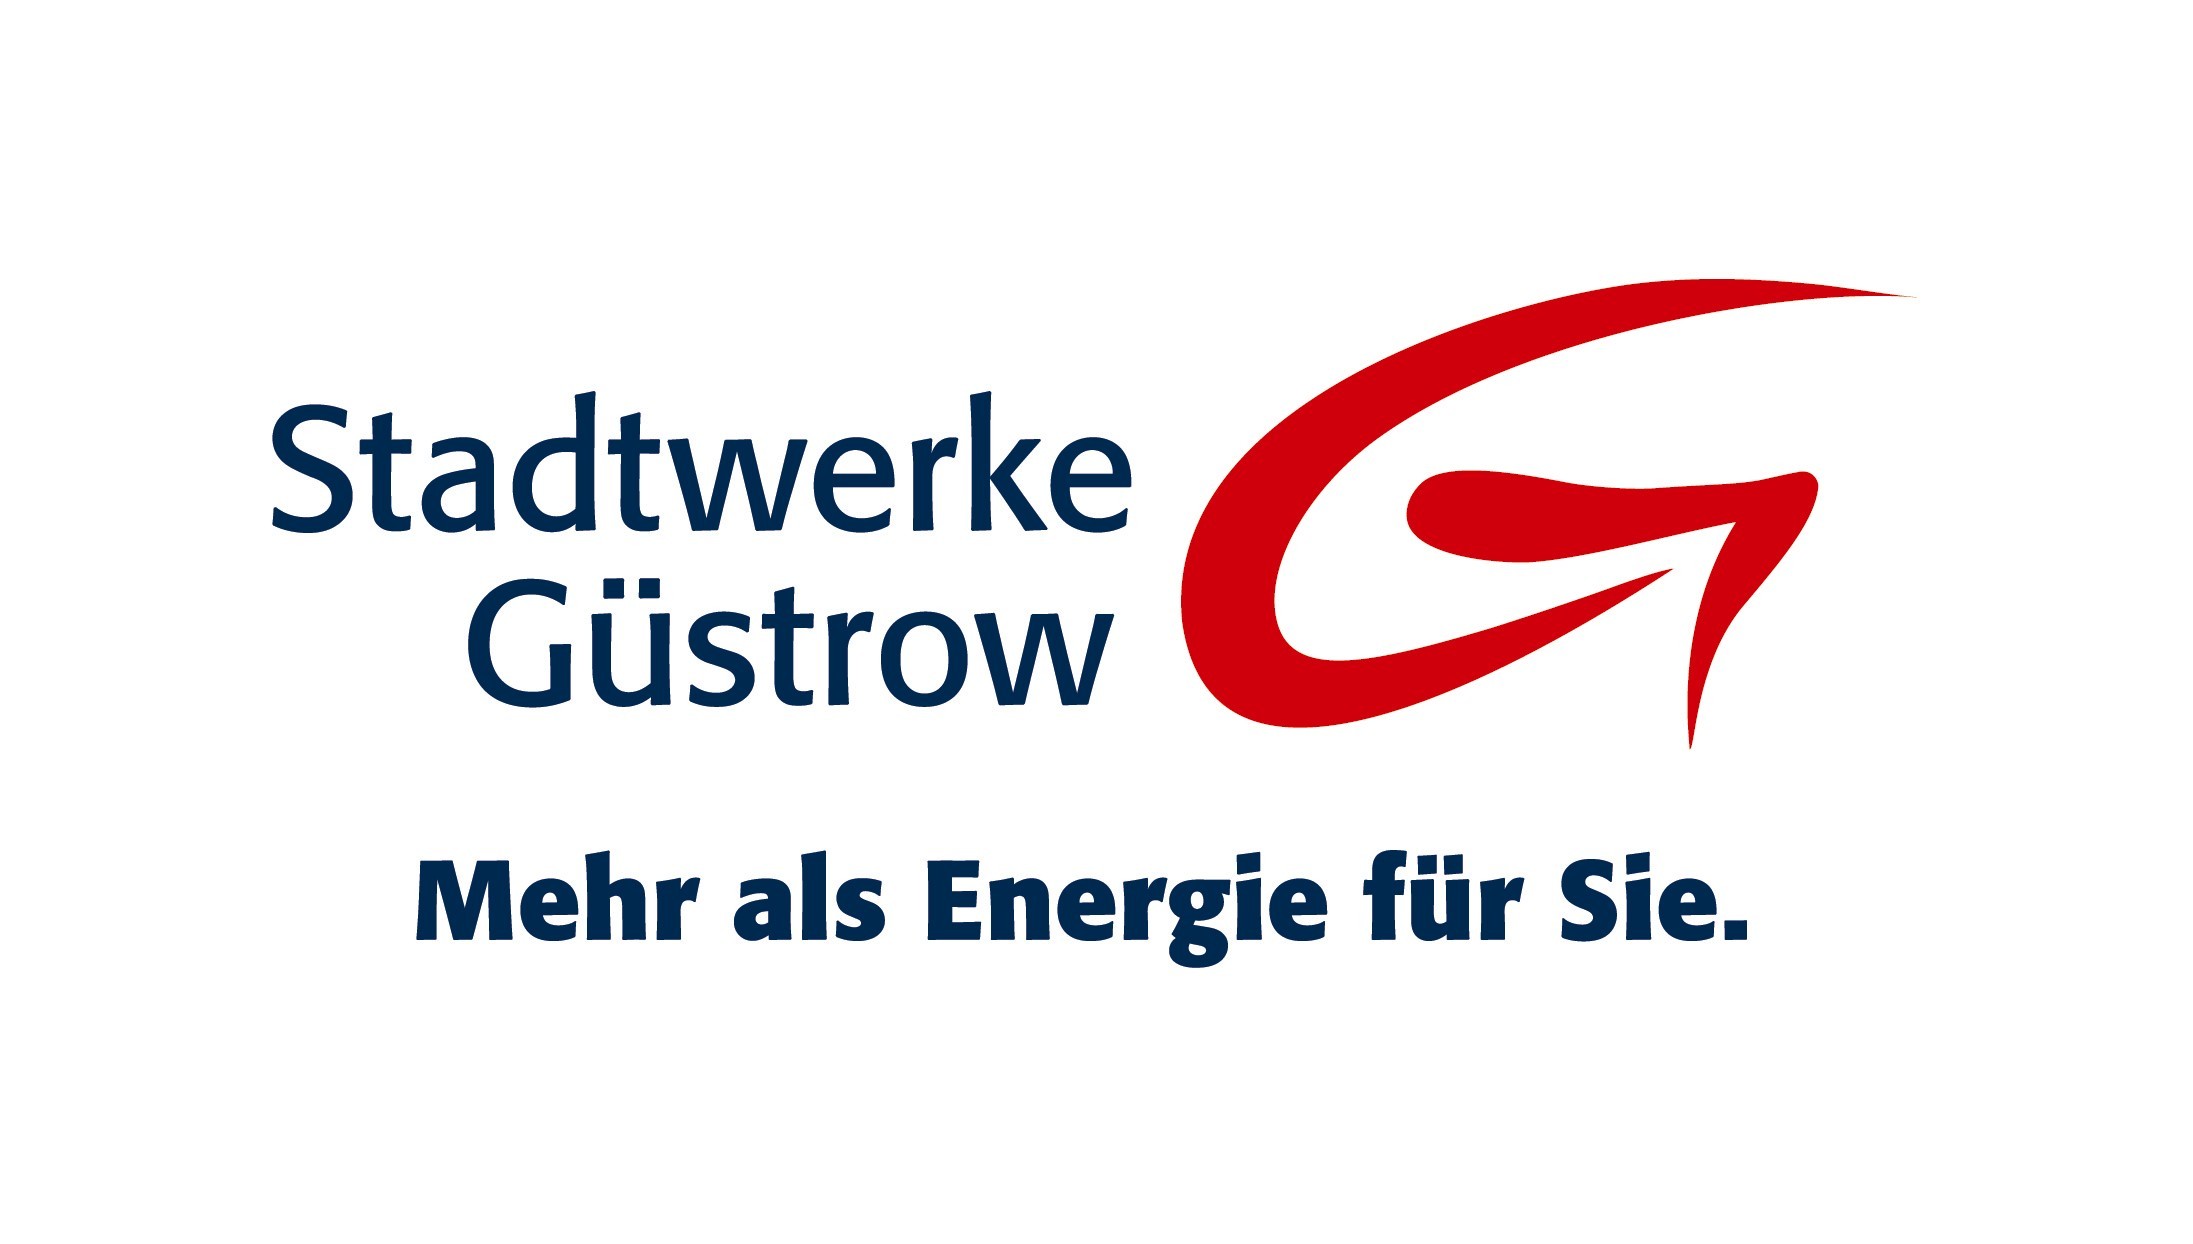 Stadtwerke Gstrow GmbH